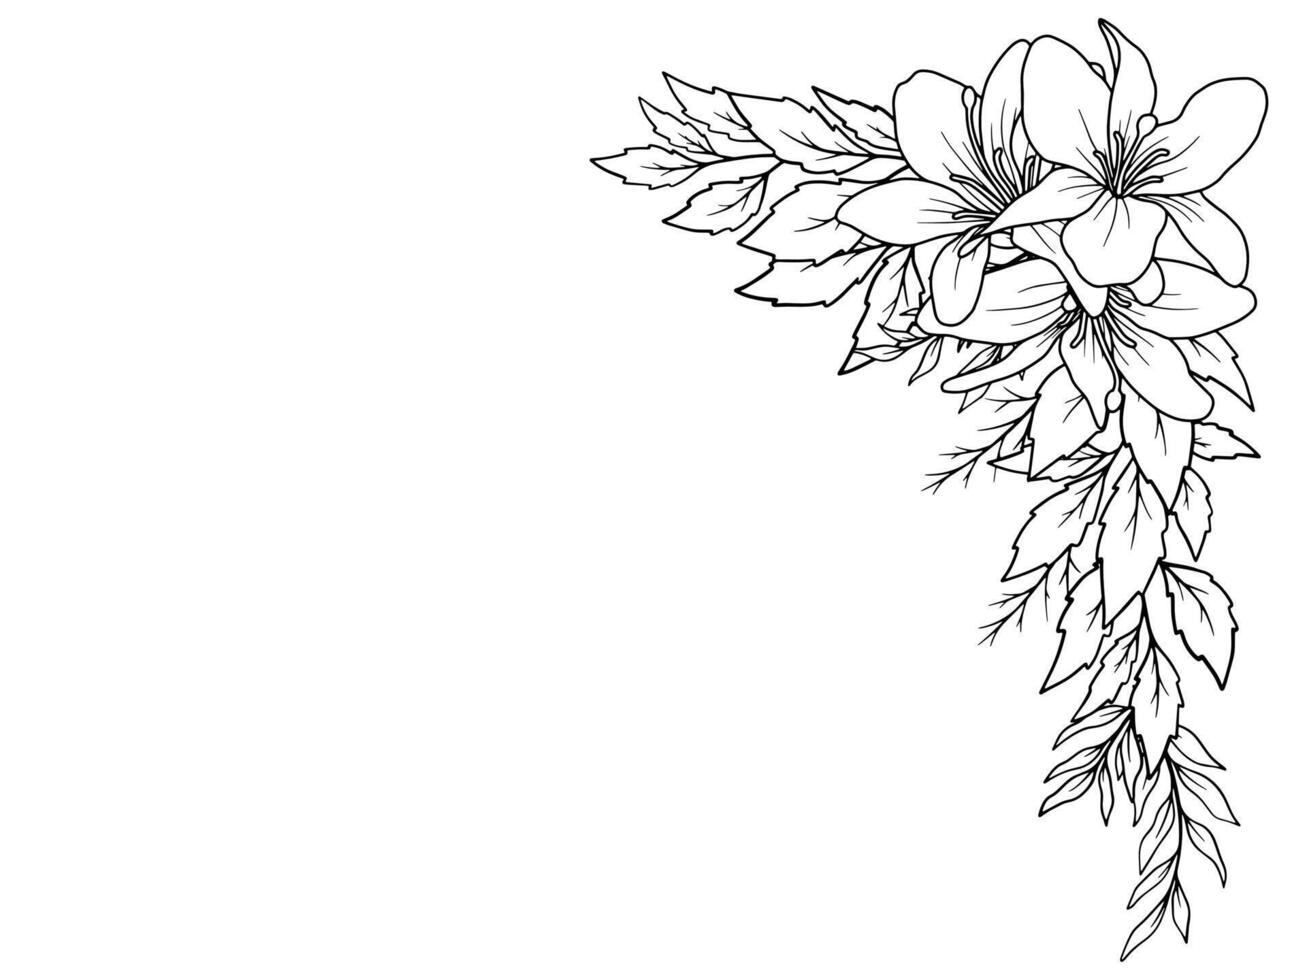 Flower Bouquet Line Art Illustration vector